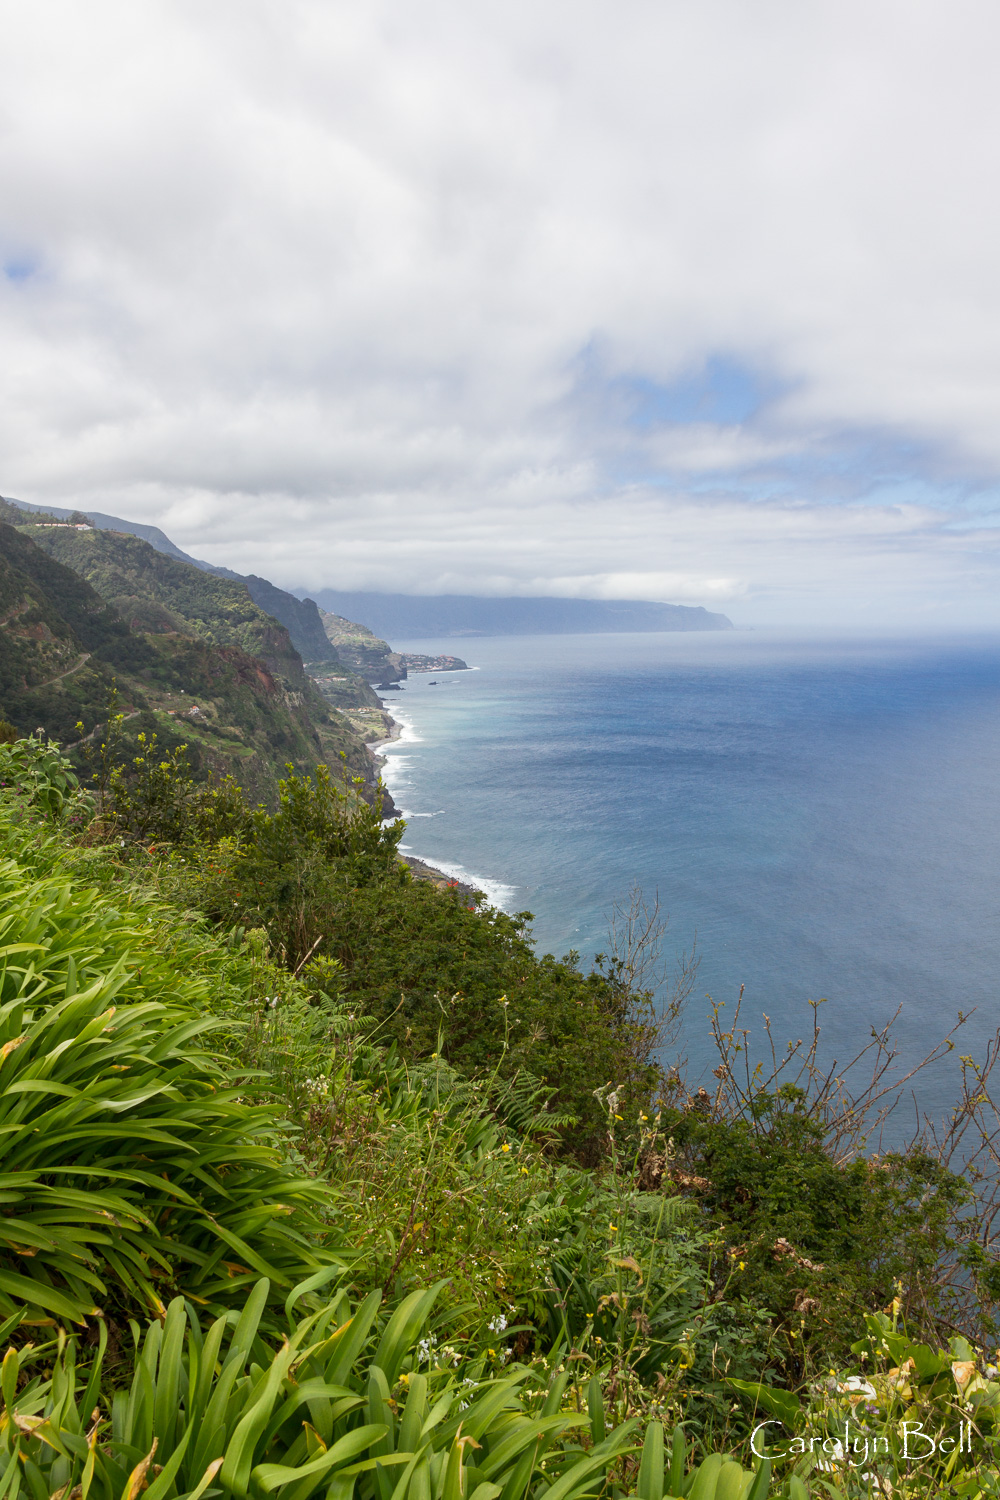 From the viewpoint near Ponta de Sao Jorge